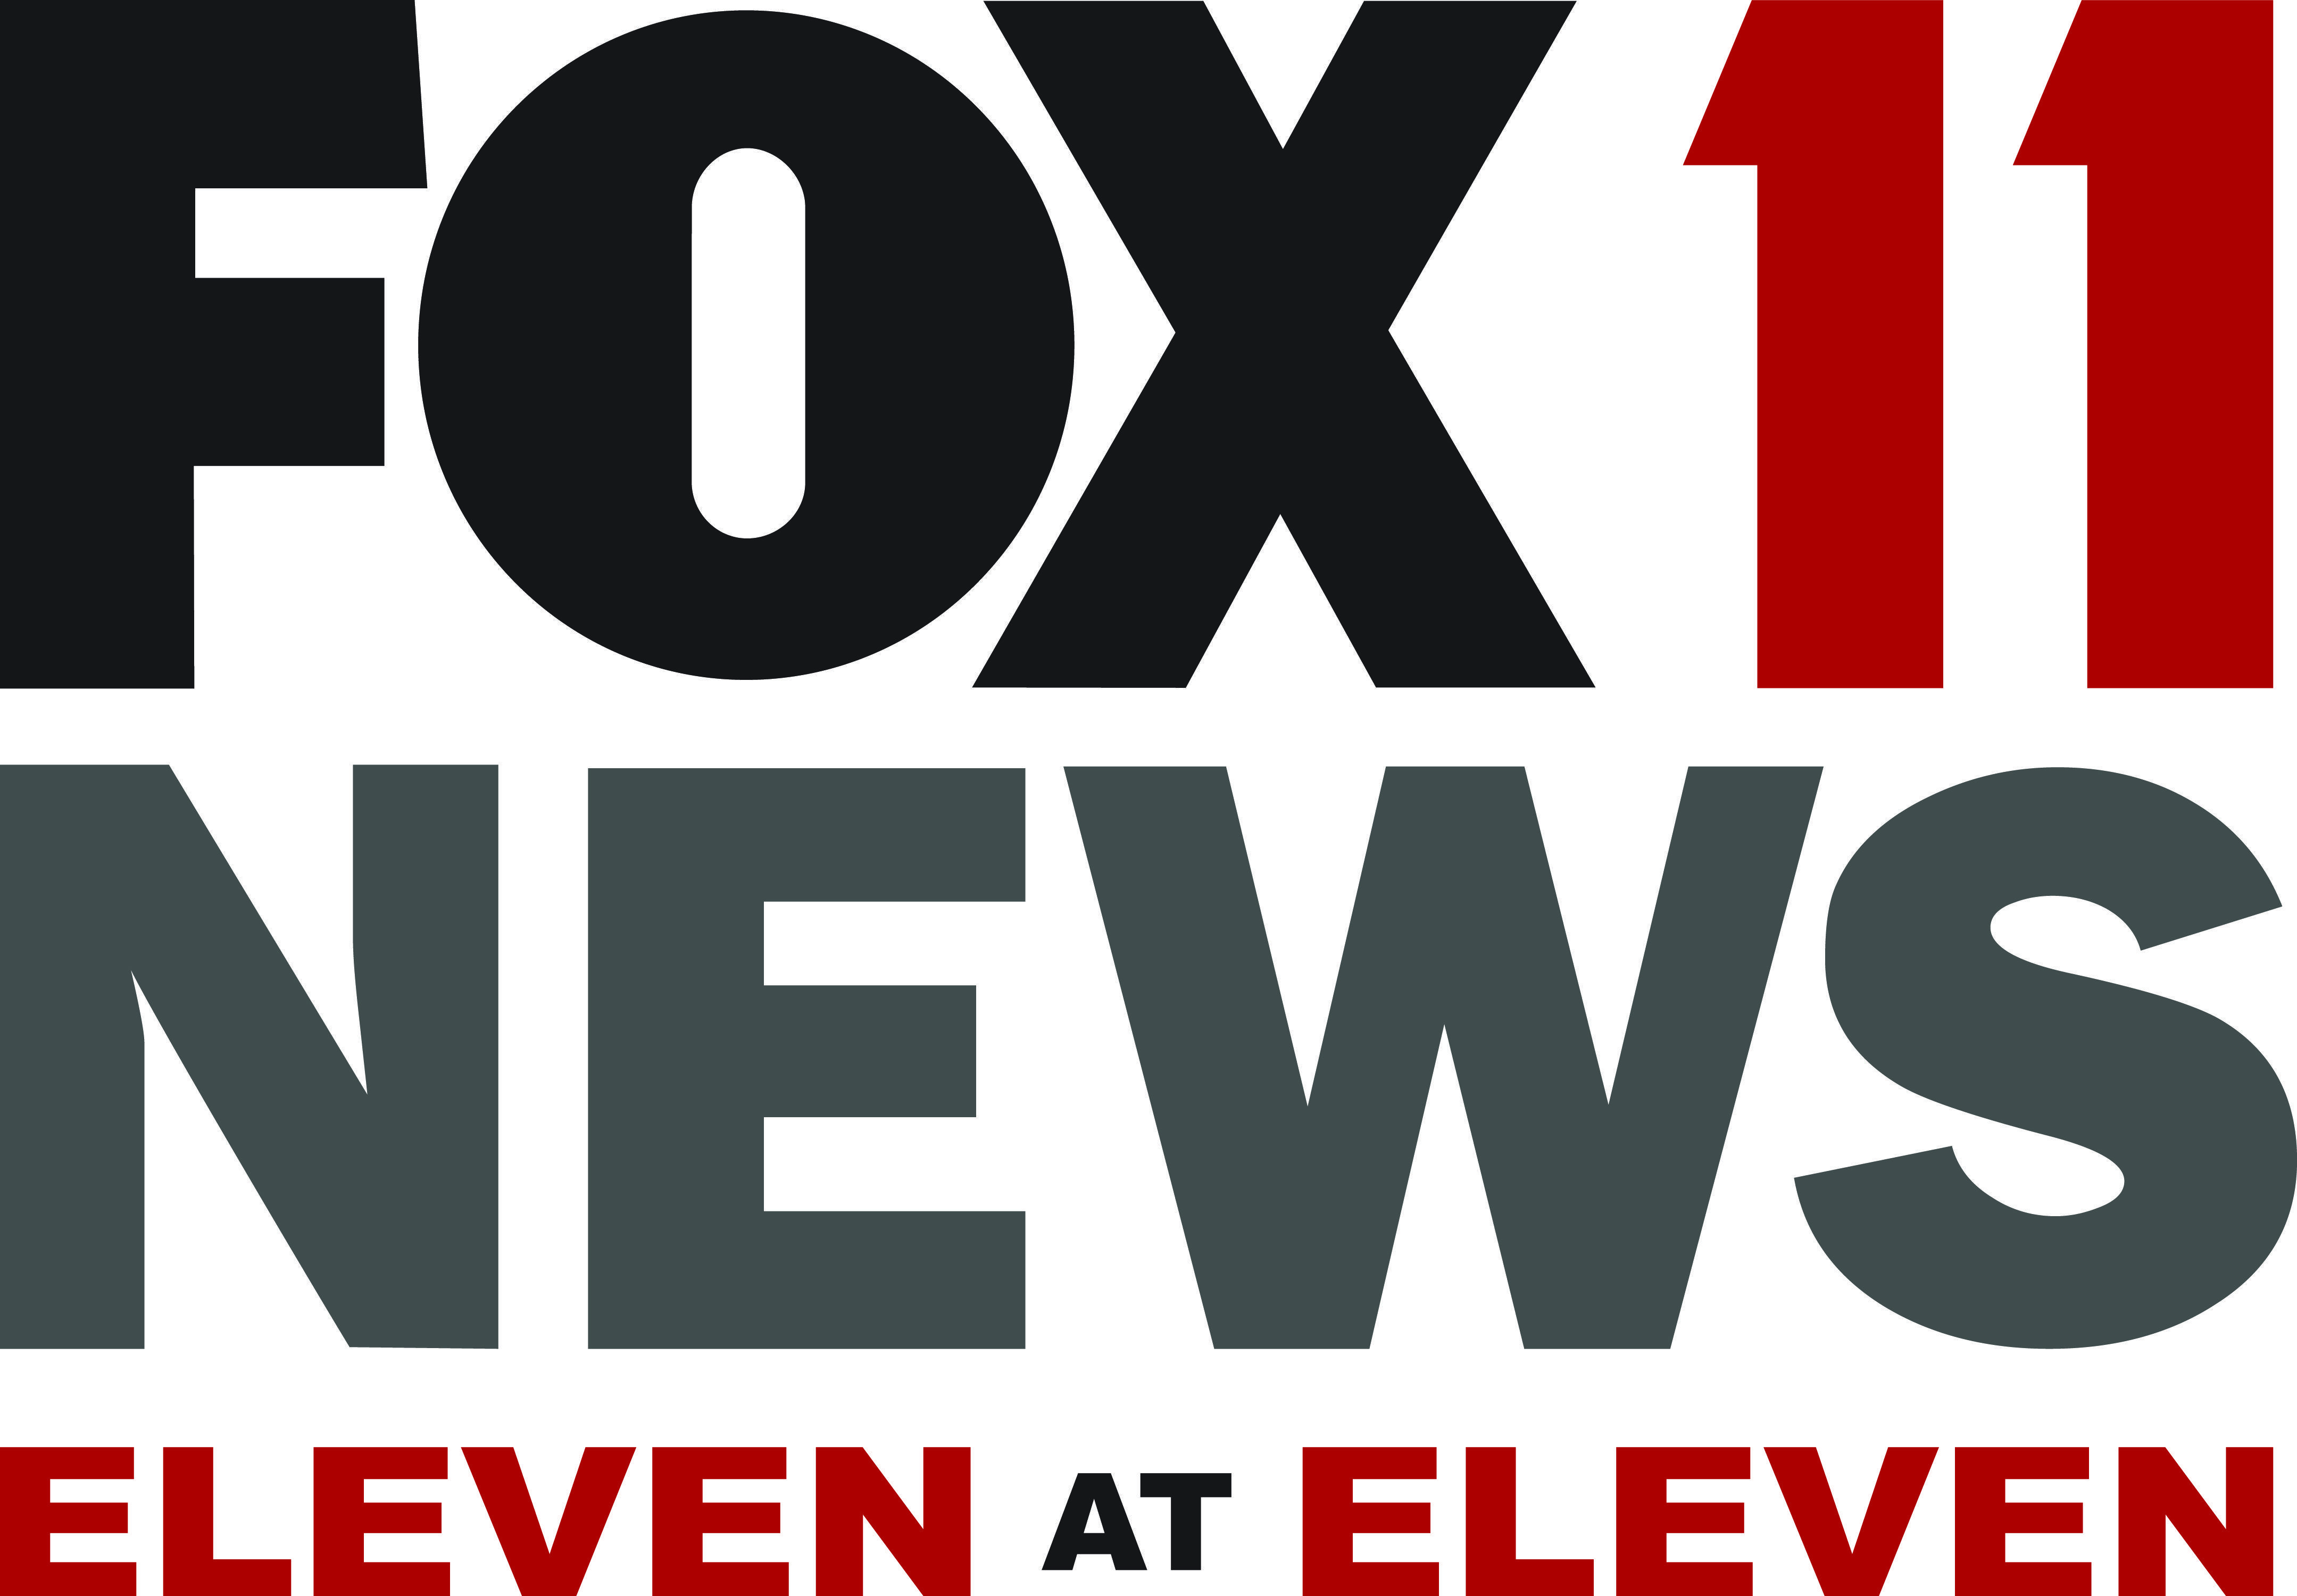 Fox News Channel Logo - File:Fox 11 News logo.jpg - Wikimedia Commons